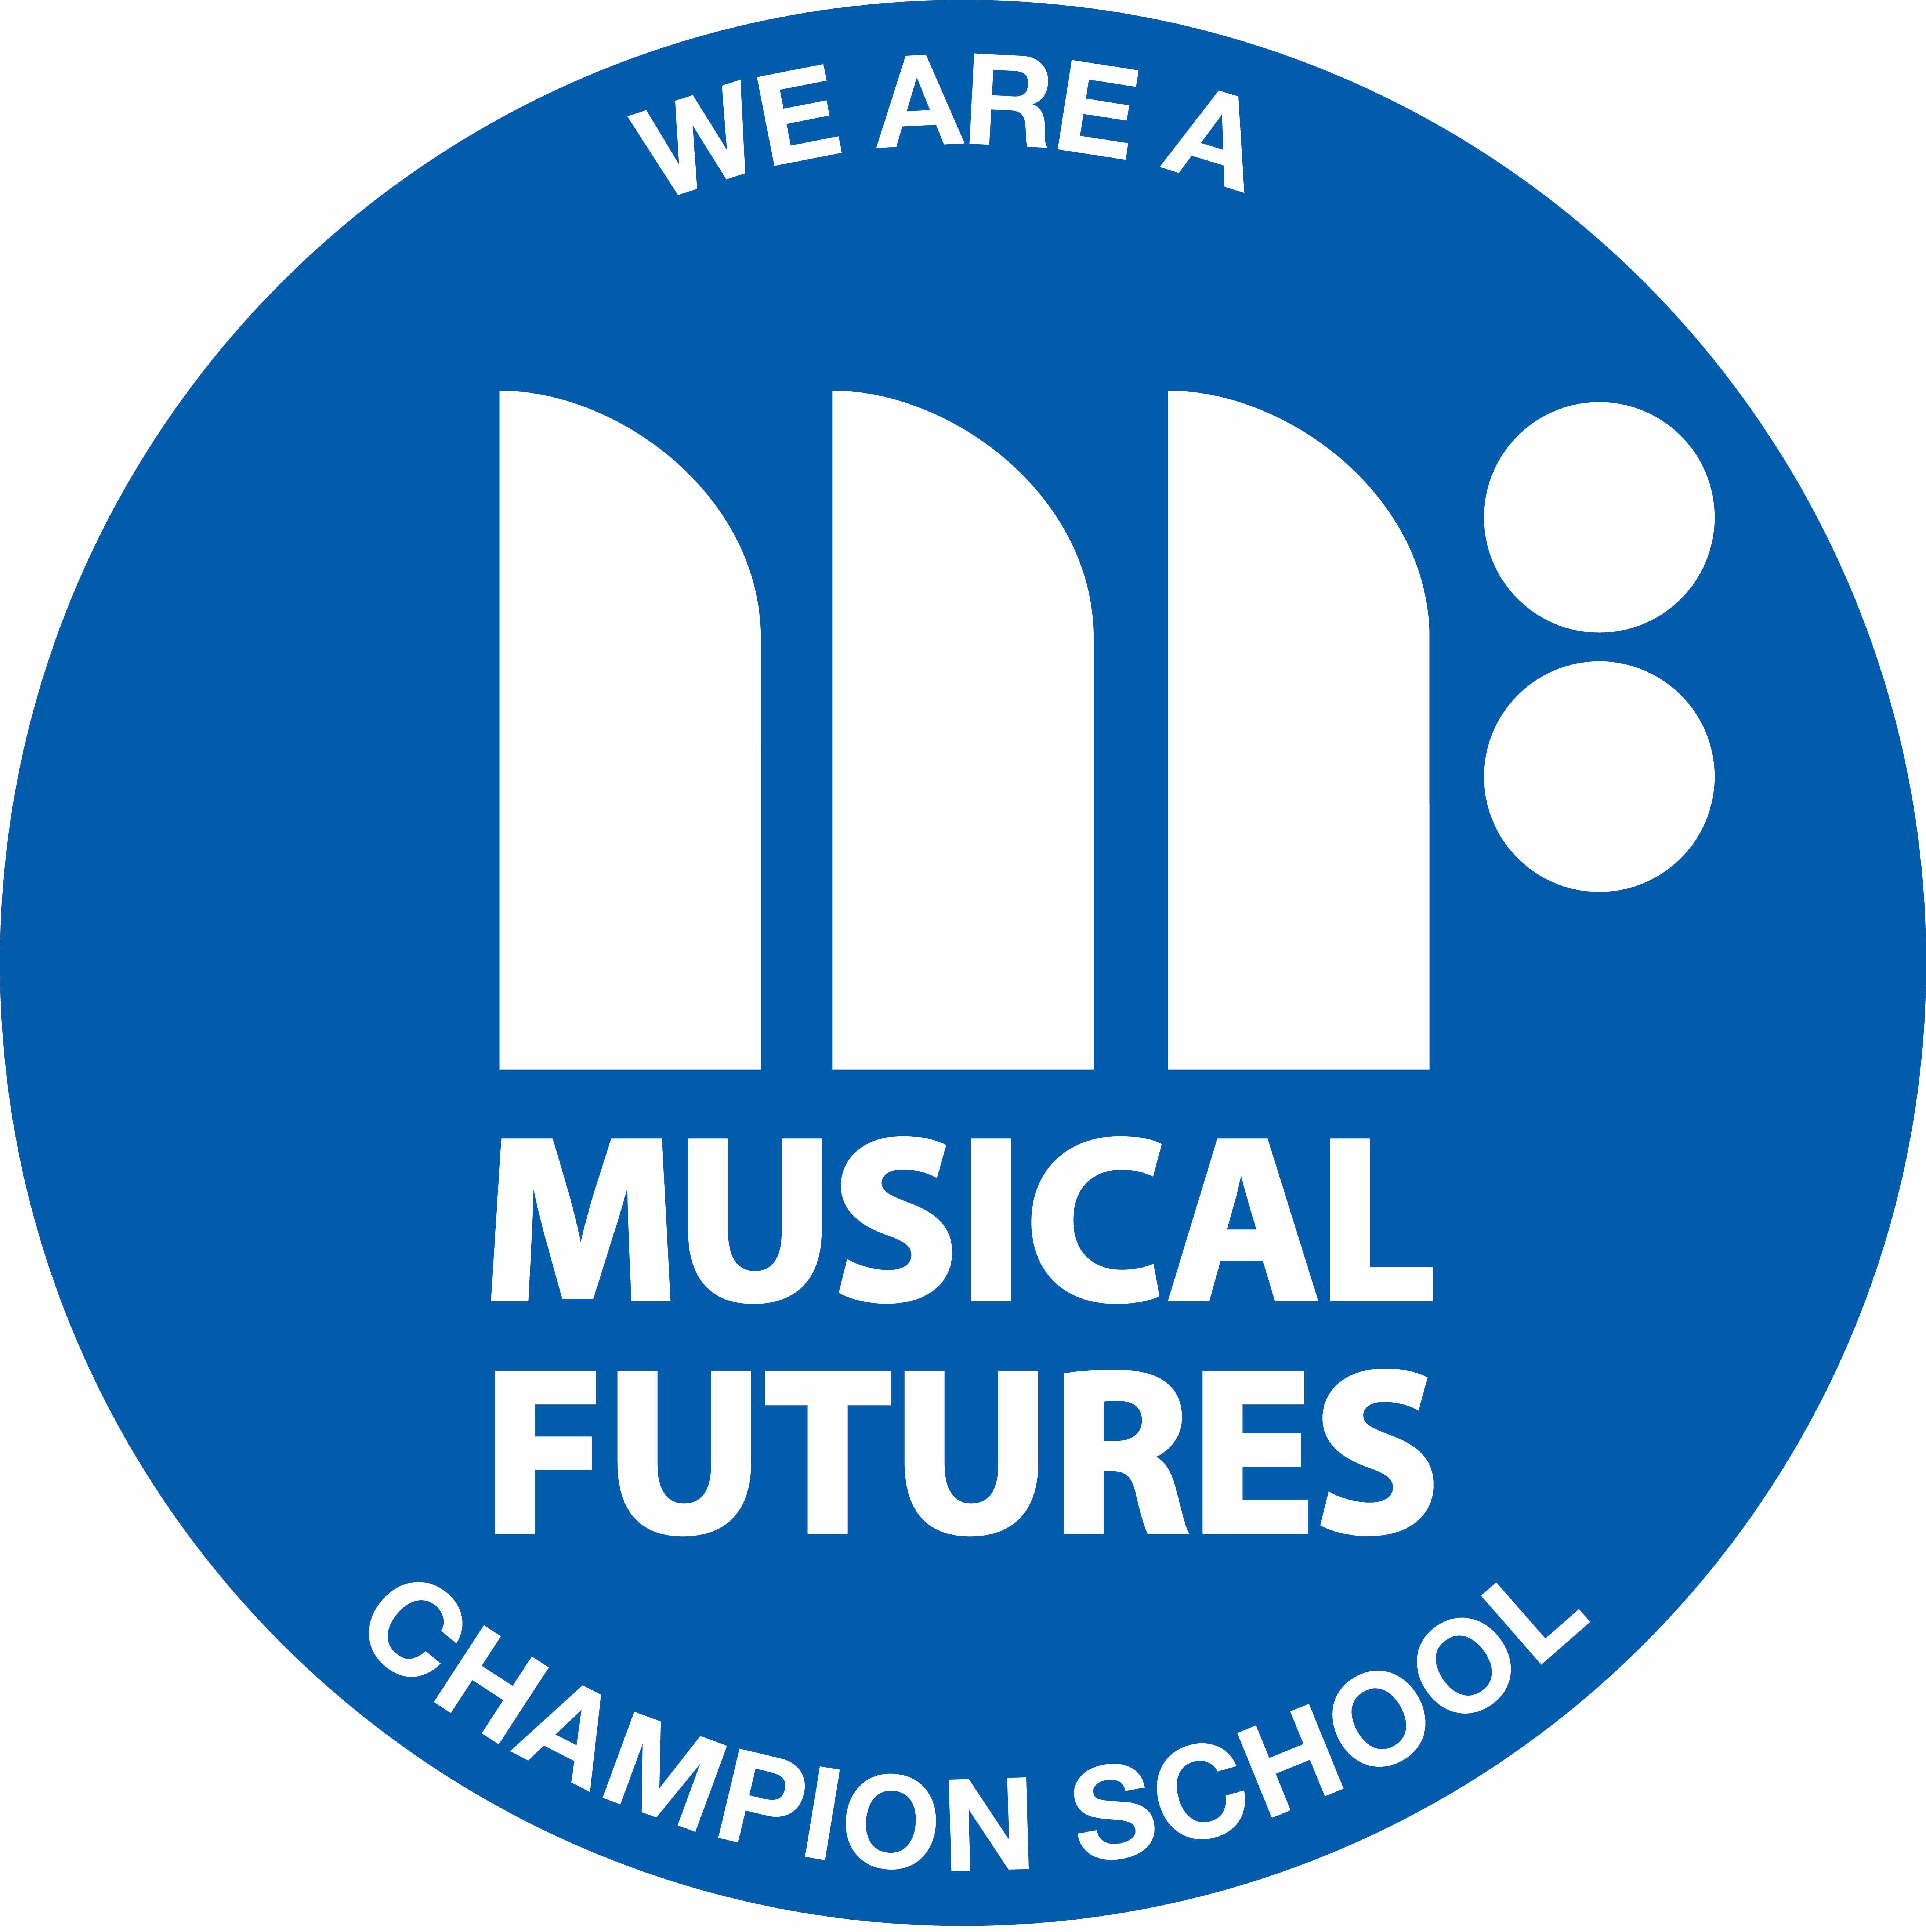 musical futures champion school